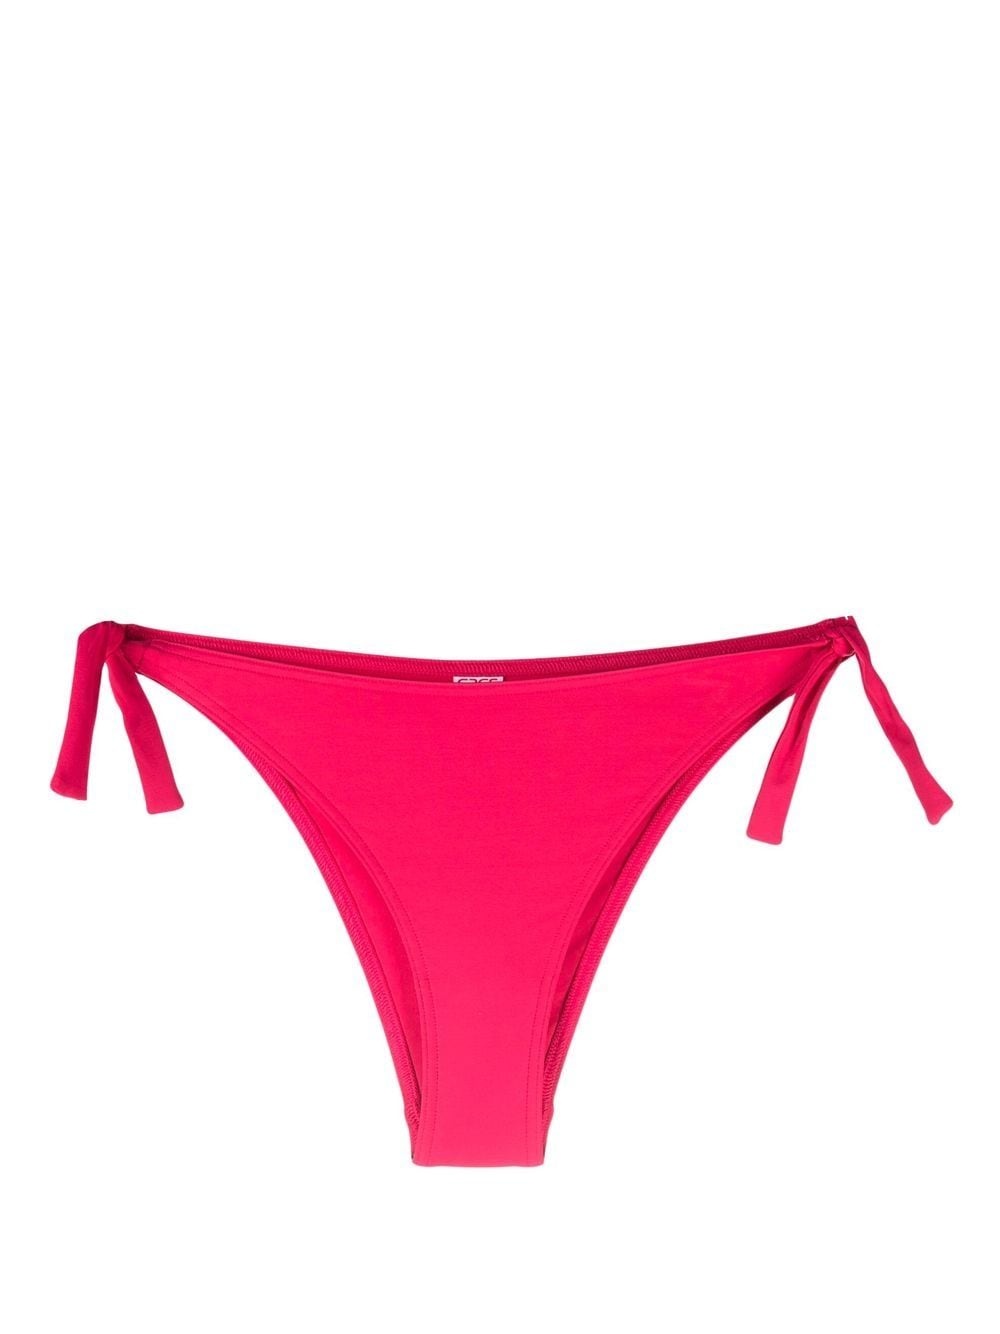 Panache thin bikini bottoms - 1